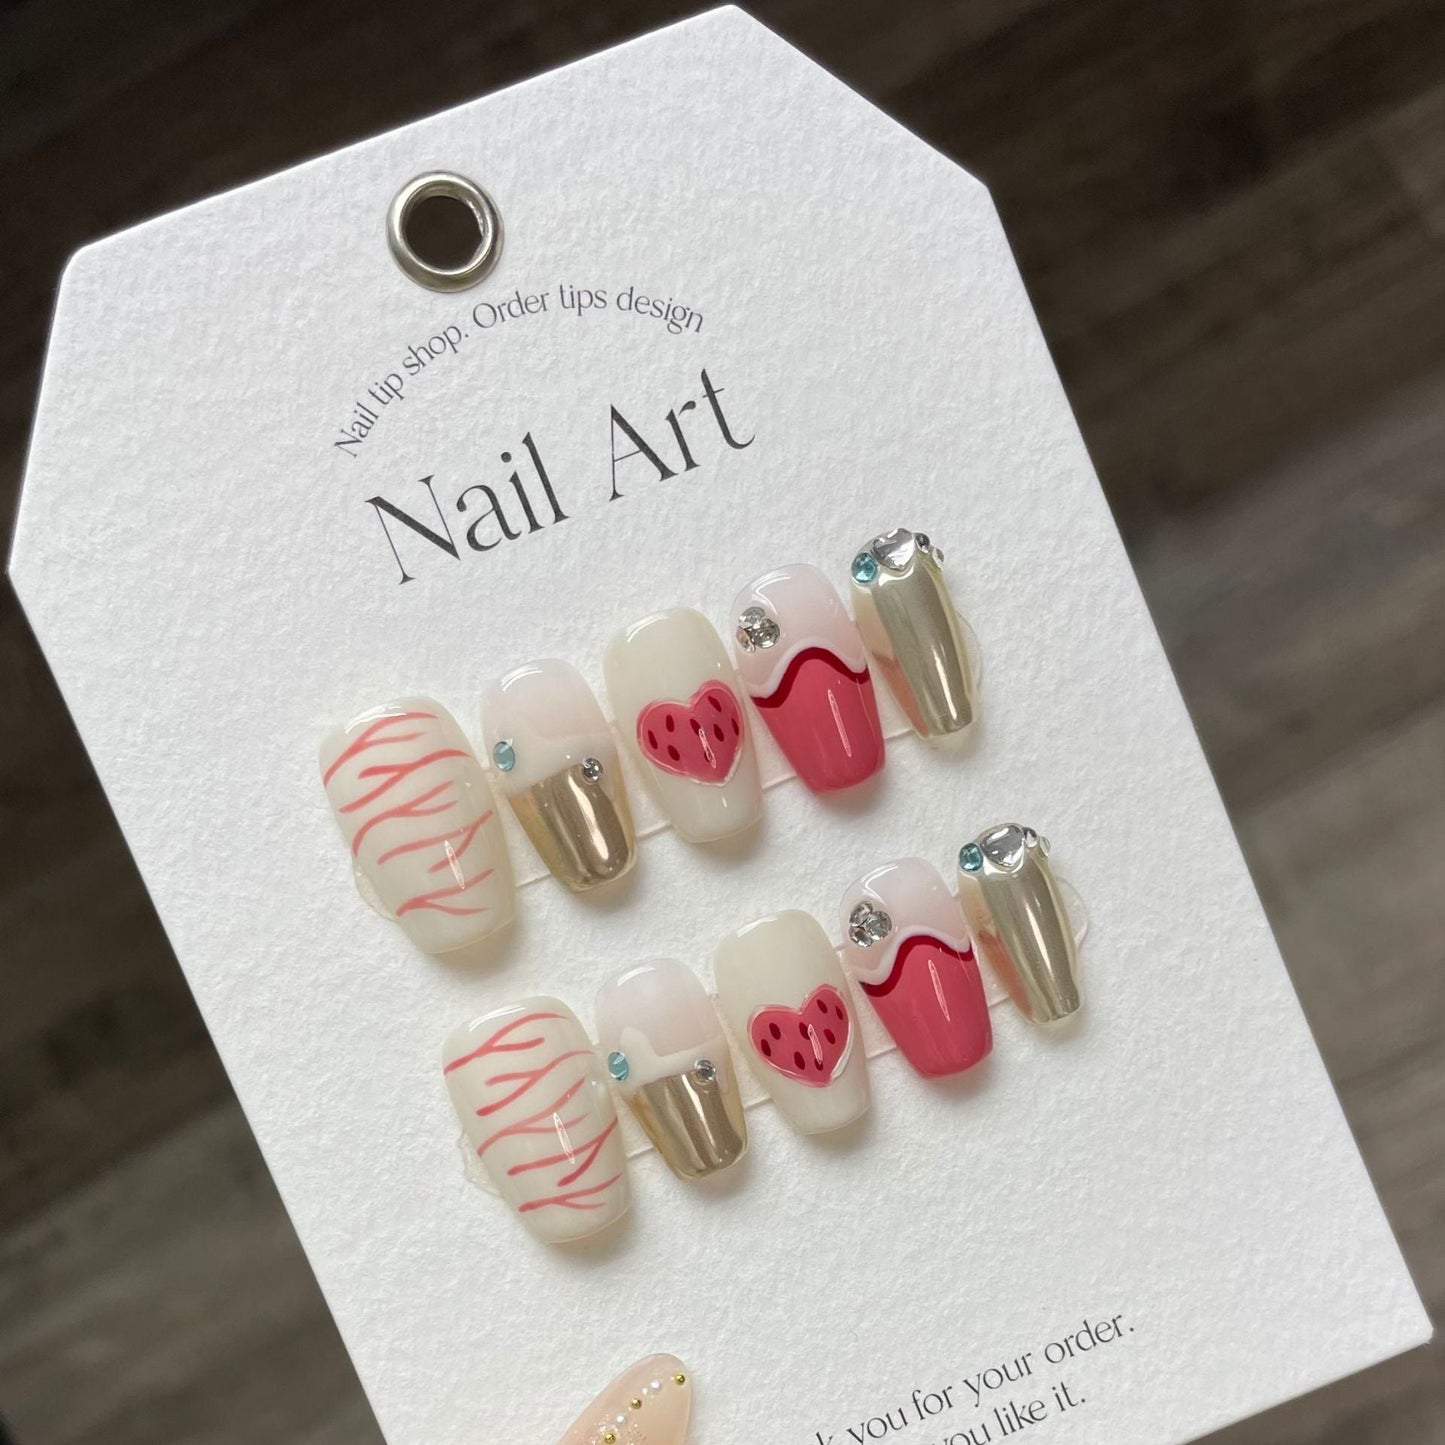 926 Cute style press on nails 100% handmade false nails pink white